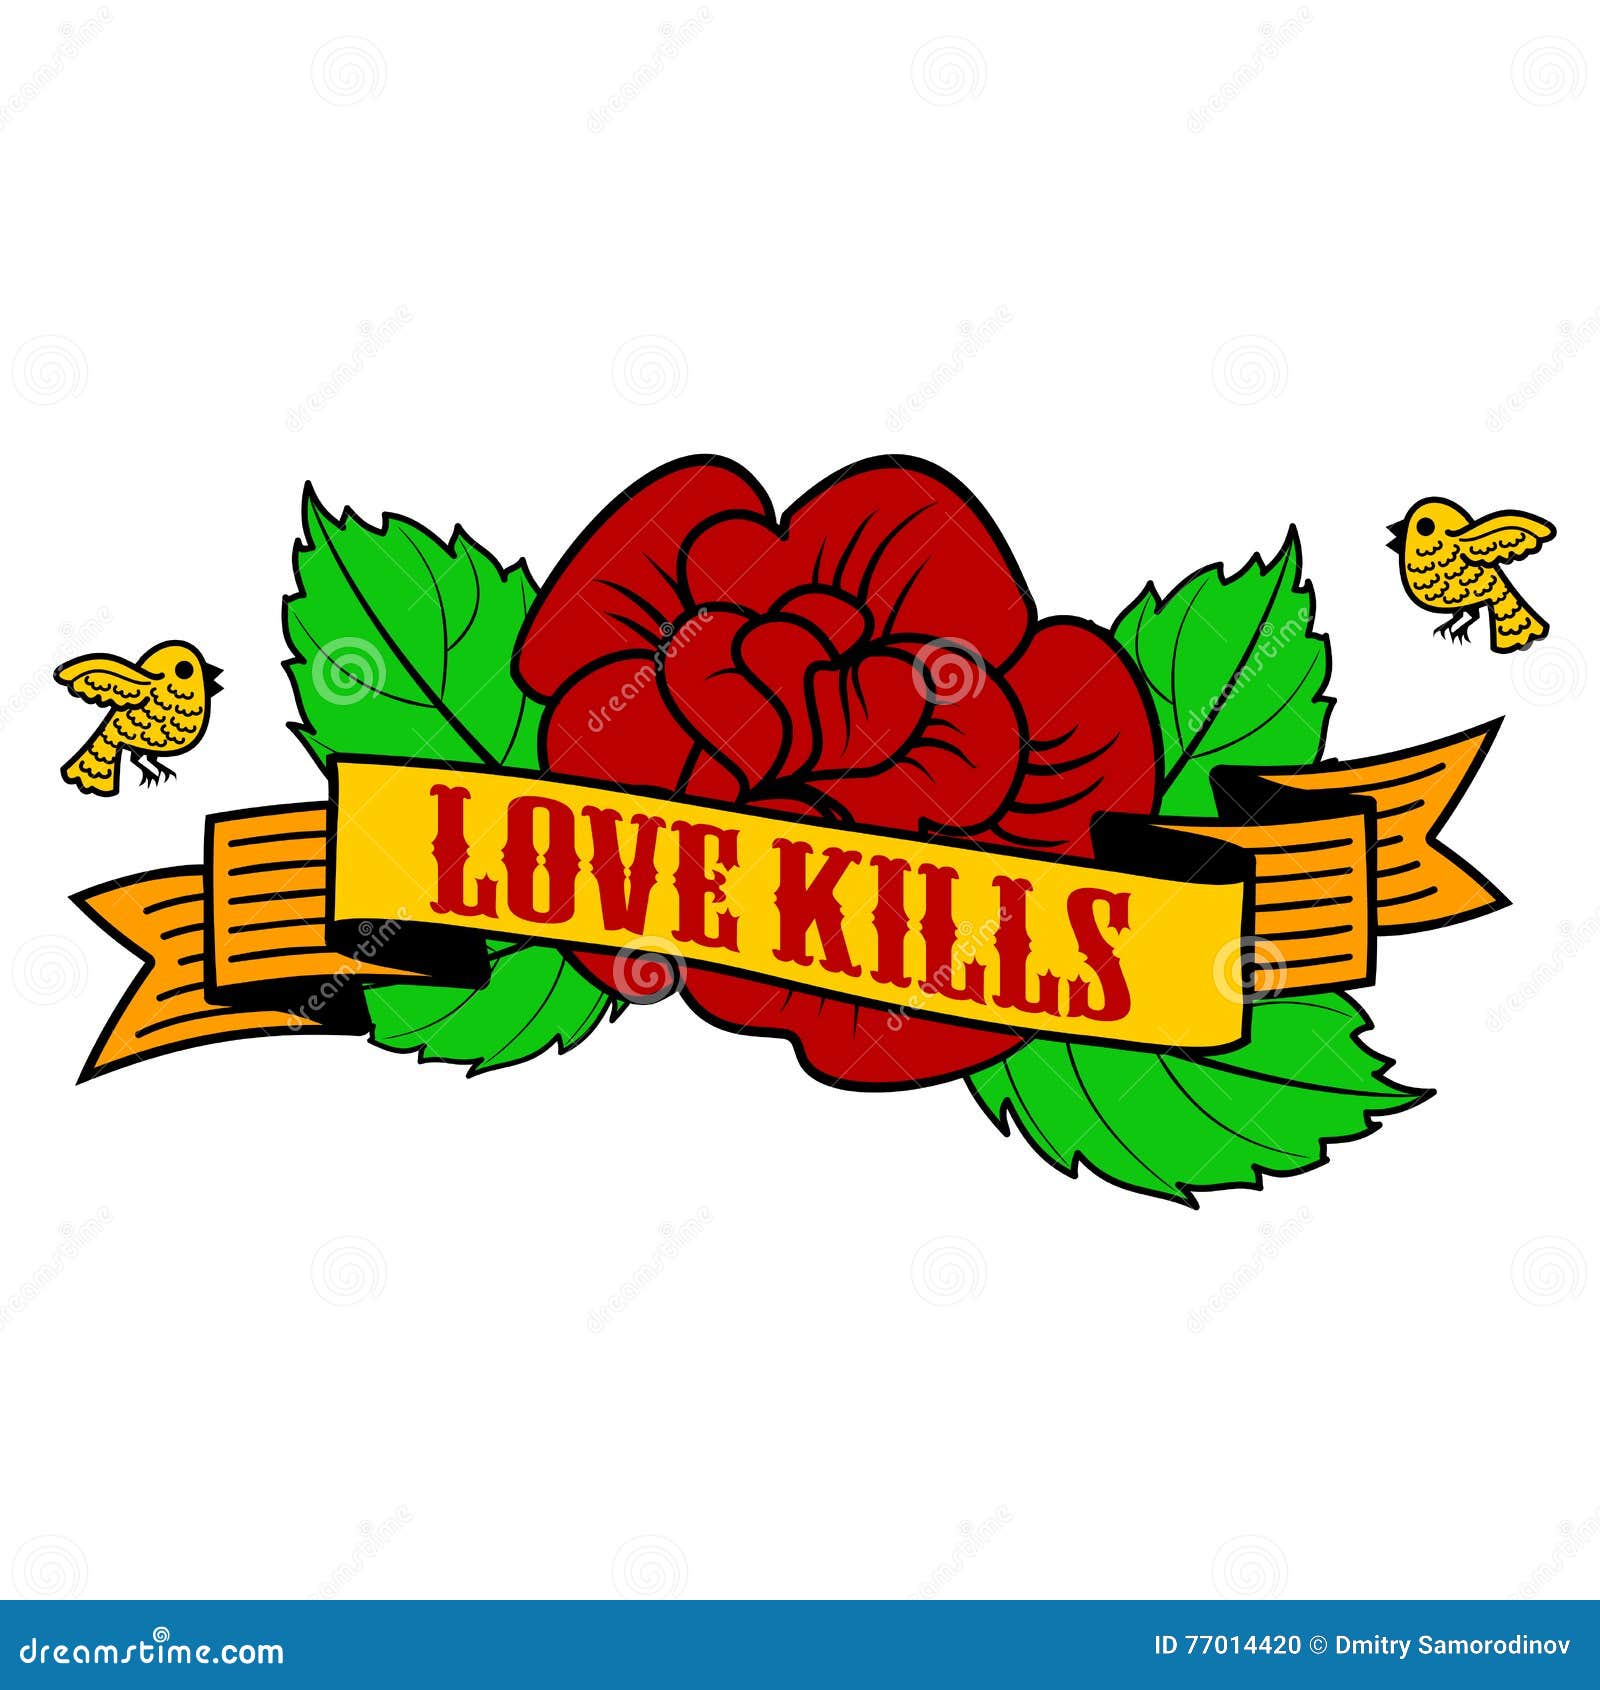 Love Kills Tattoo Studio  Bad vibes badvibes ink instattoo tattoowork  traditionalamericantattoo dagger swallow  Facebook